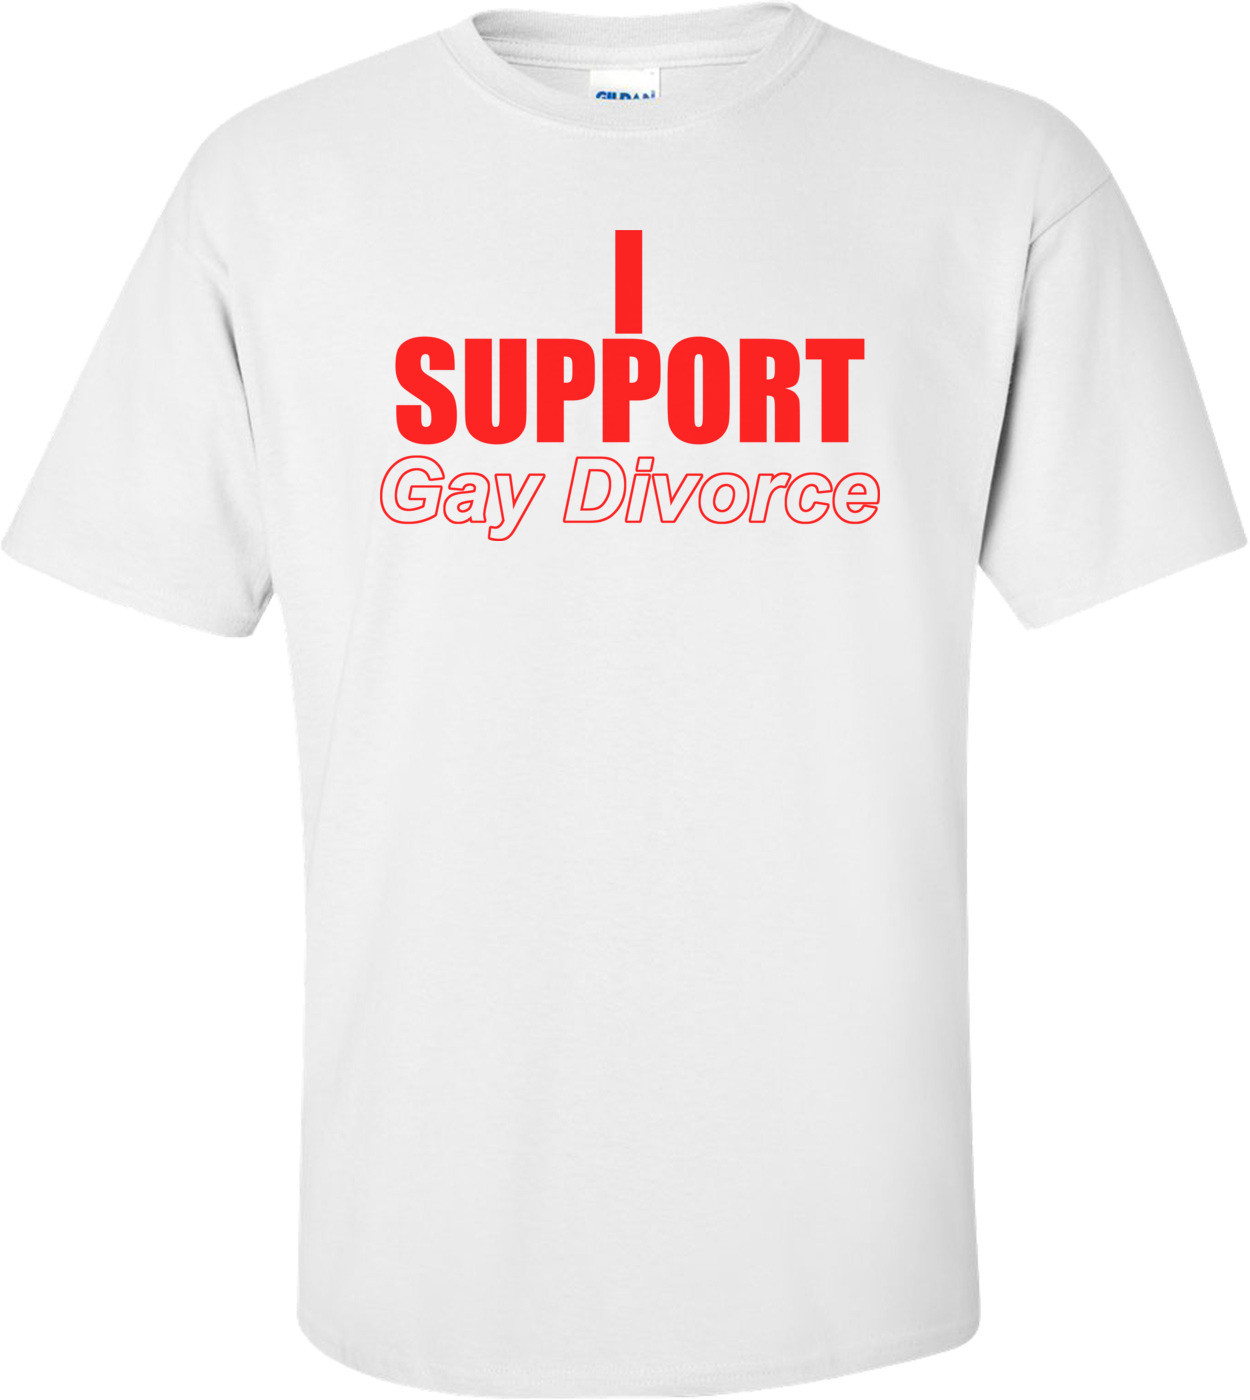 I Support Gay Divorce T-shirt